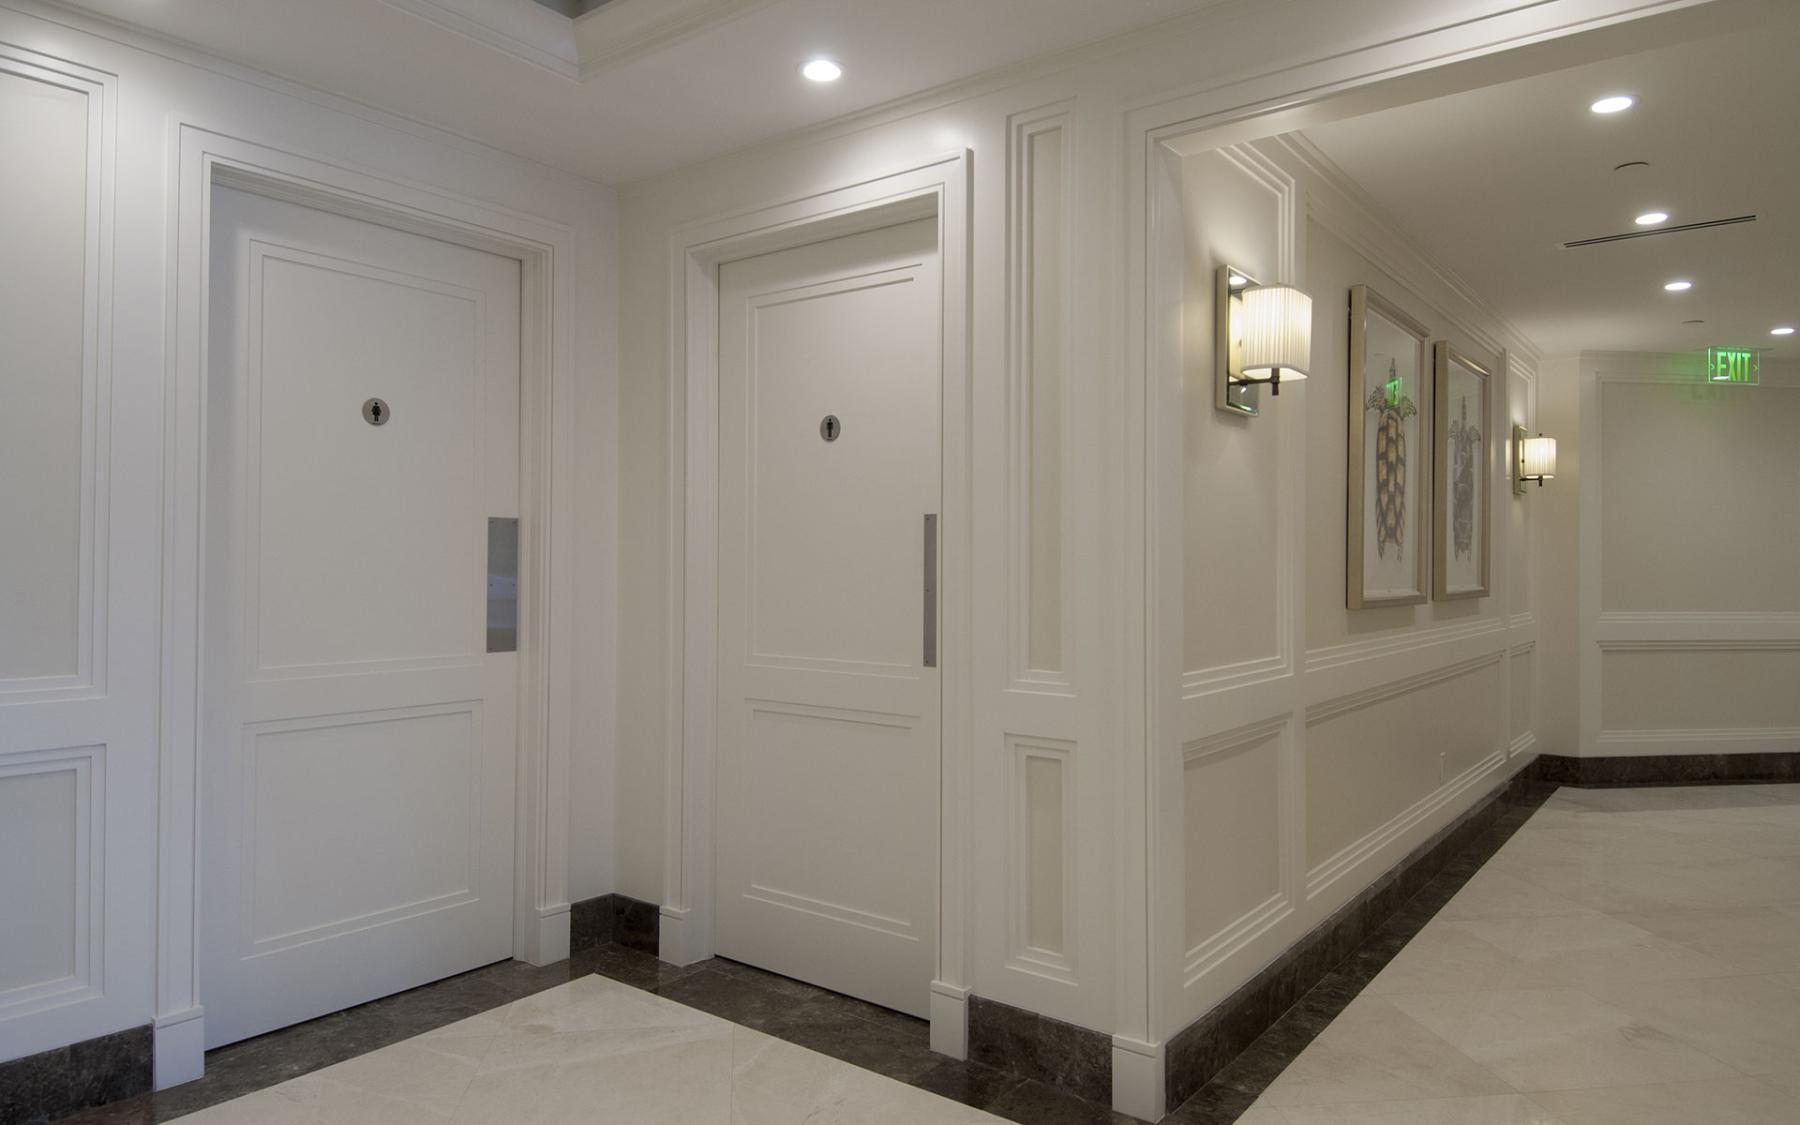 Custom restroom doors designed to match existing millwork